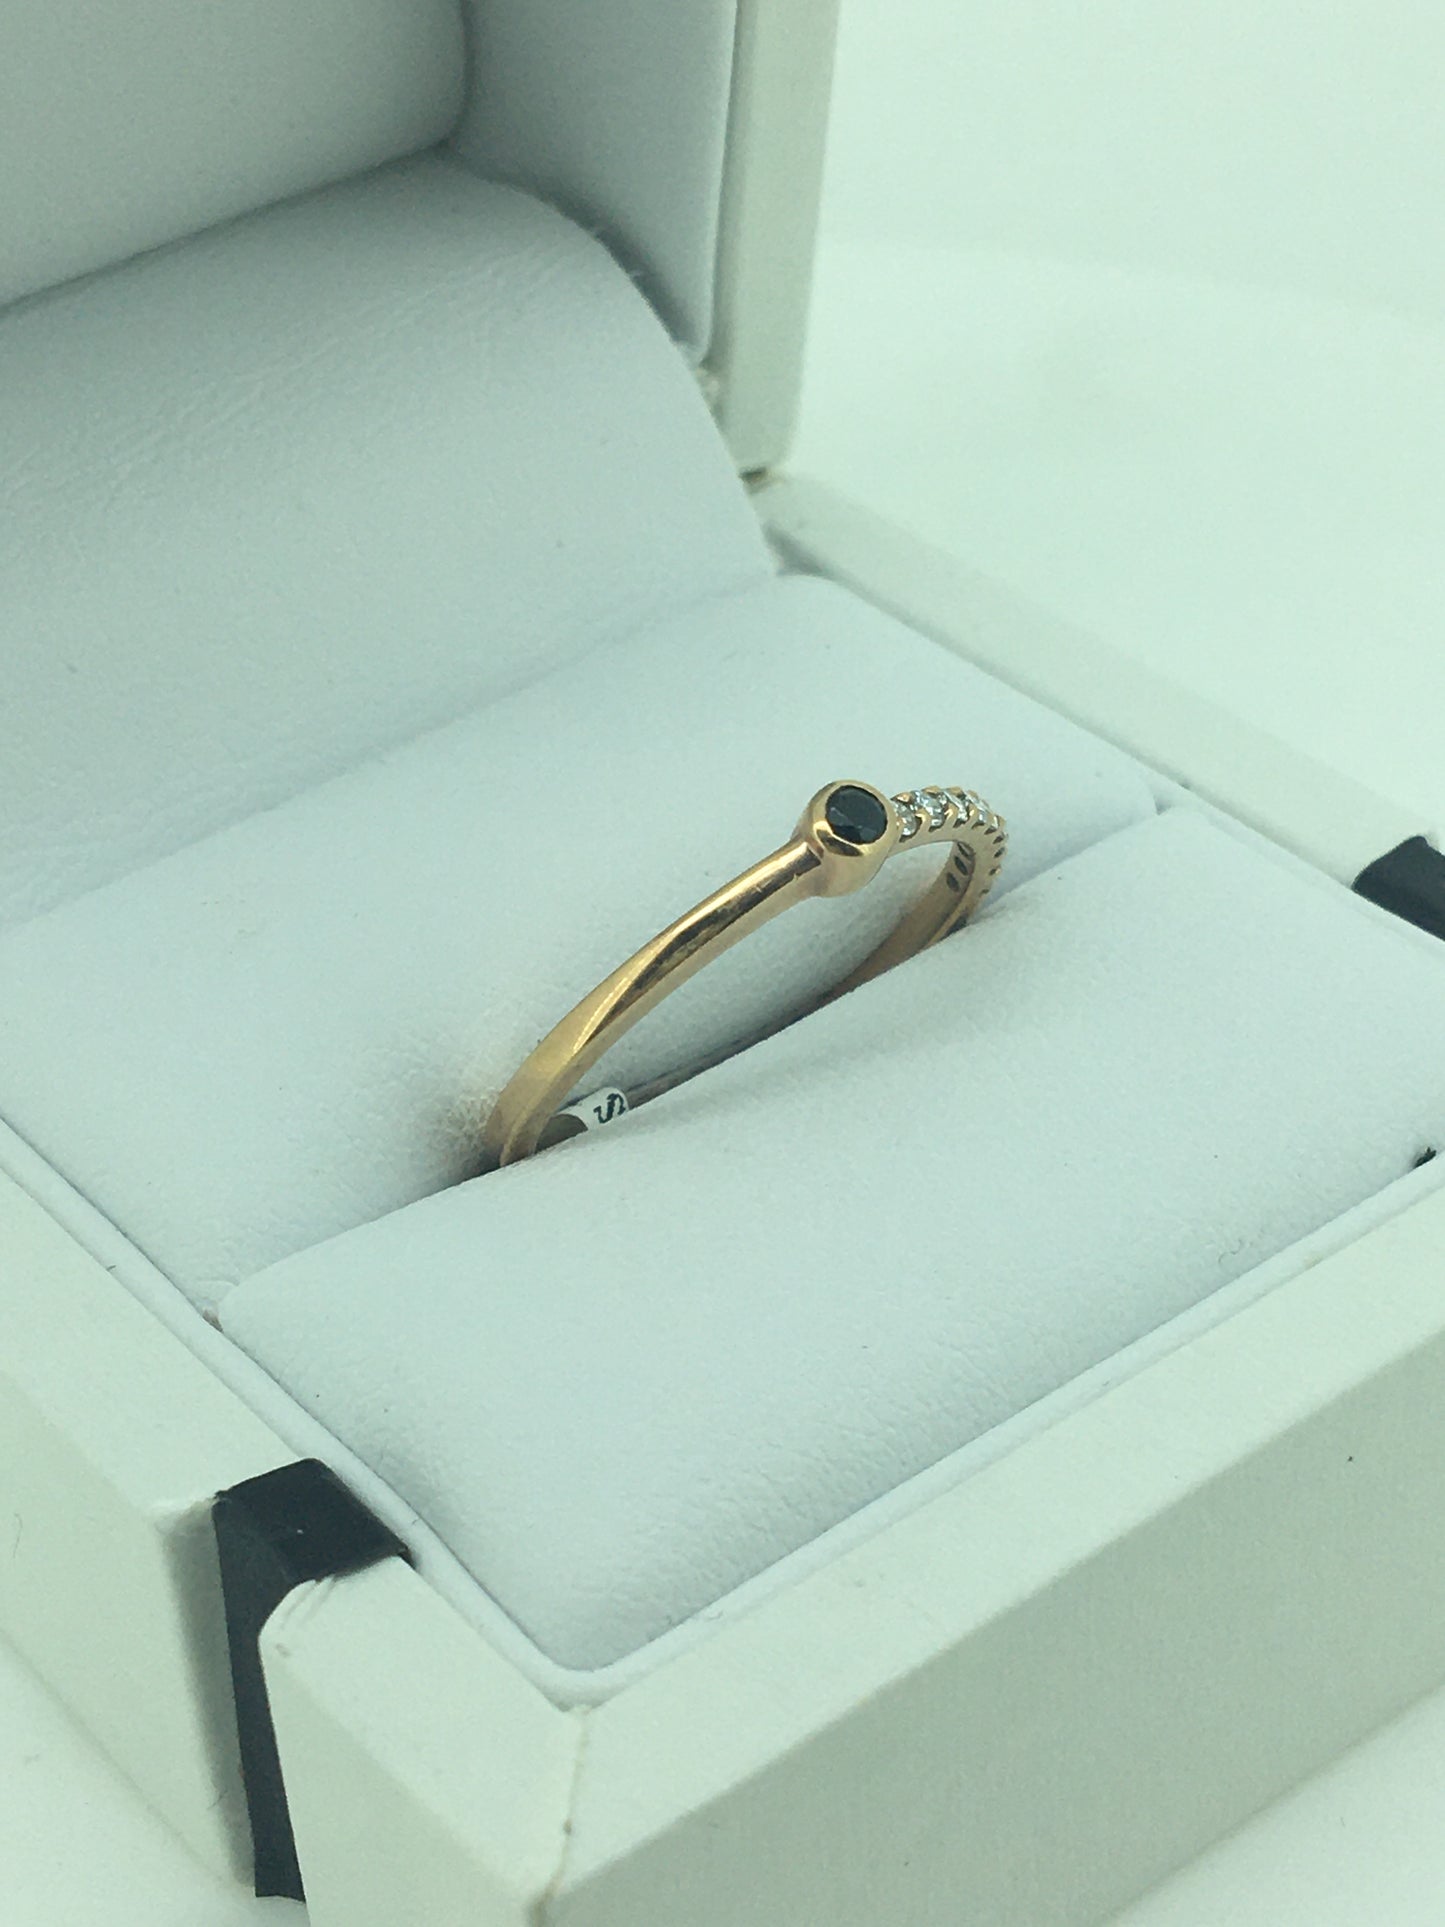 9ct Rose Gold Sapphire & Diamond Ring